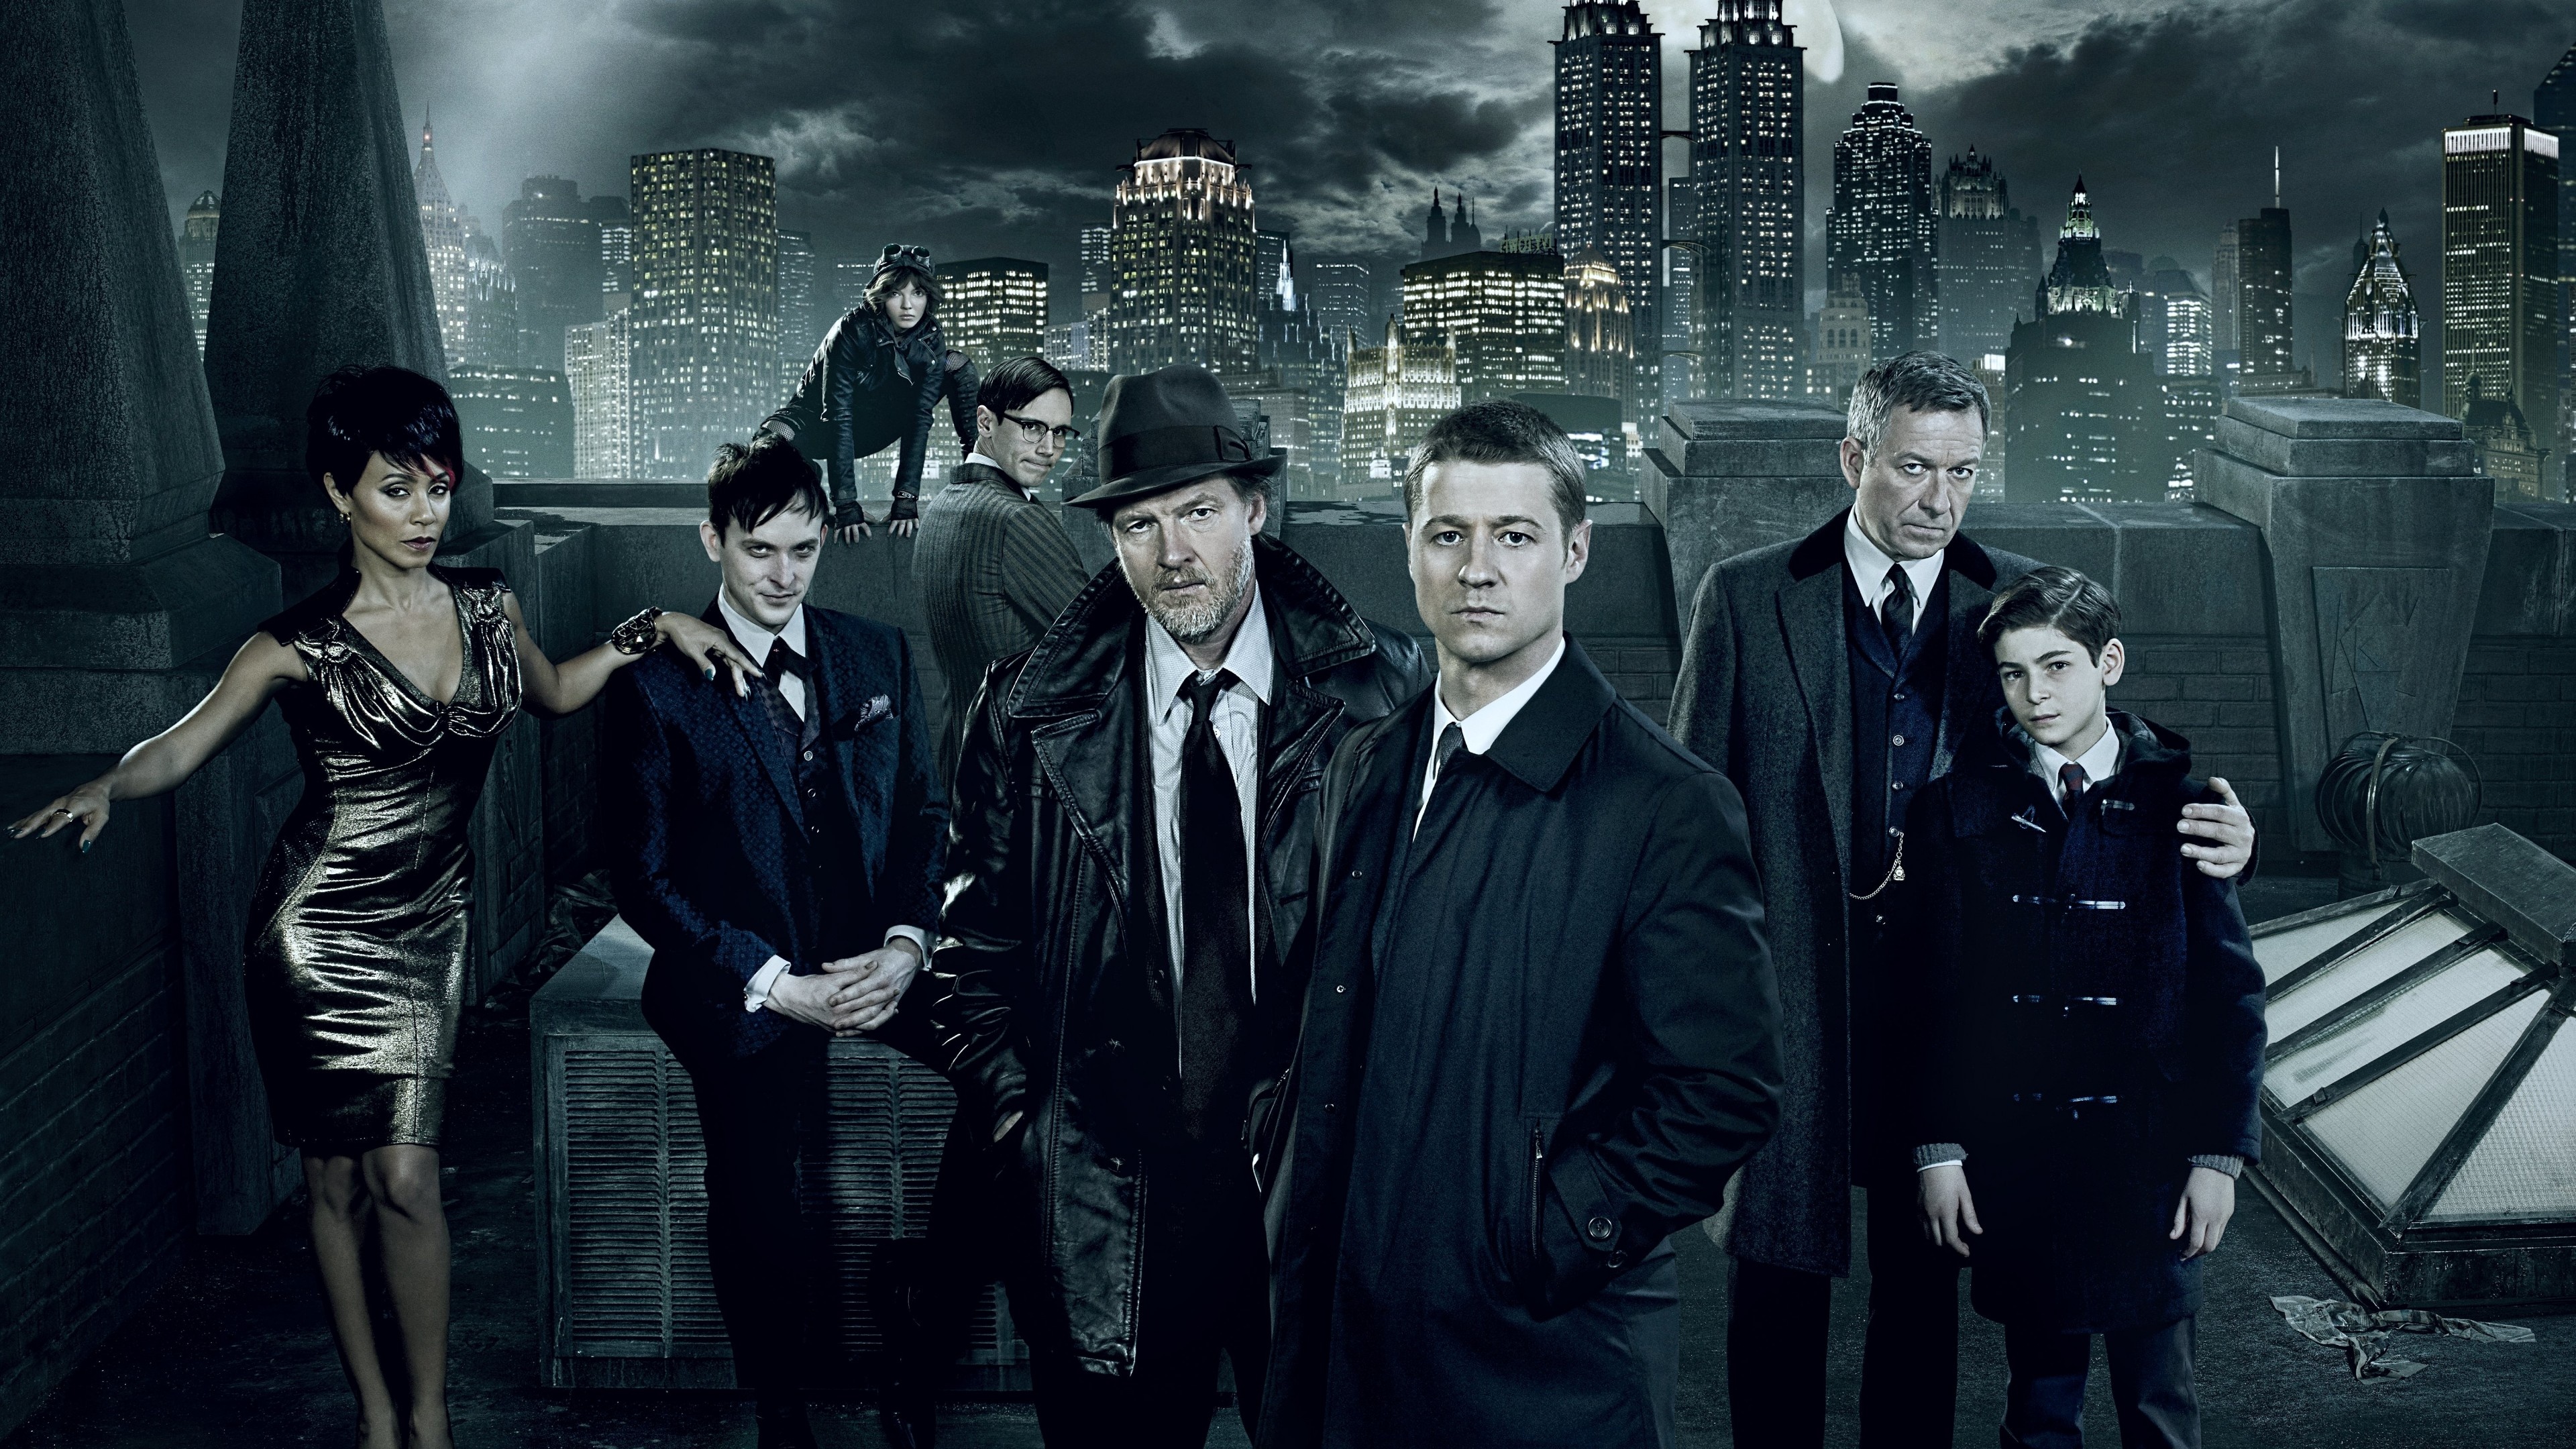 Gotham City movies, Season 2 wallpapers, Crime-ridden TV series, Noir film aesthetics, 3840x2160 4K Desktop